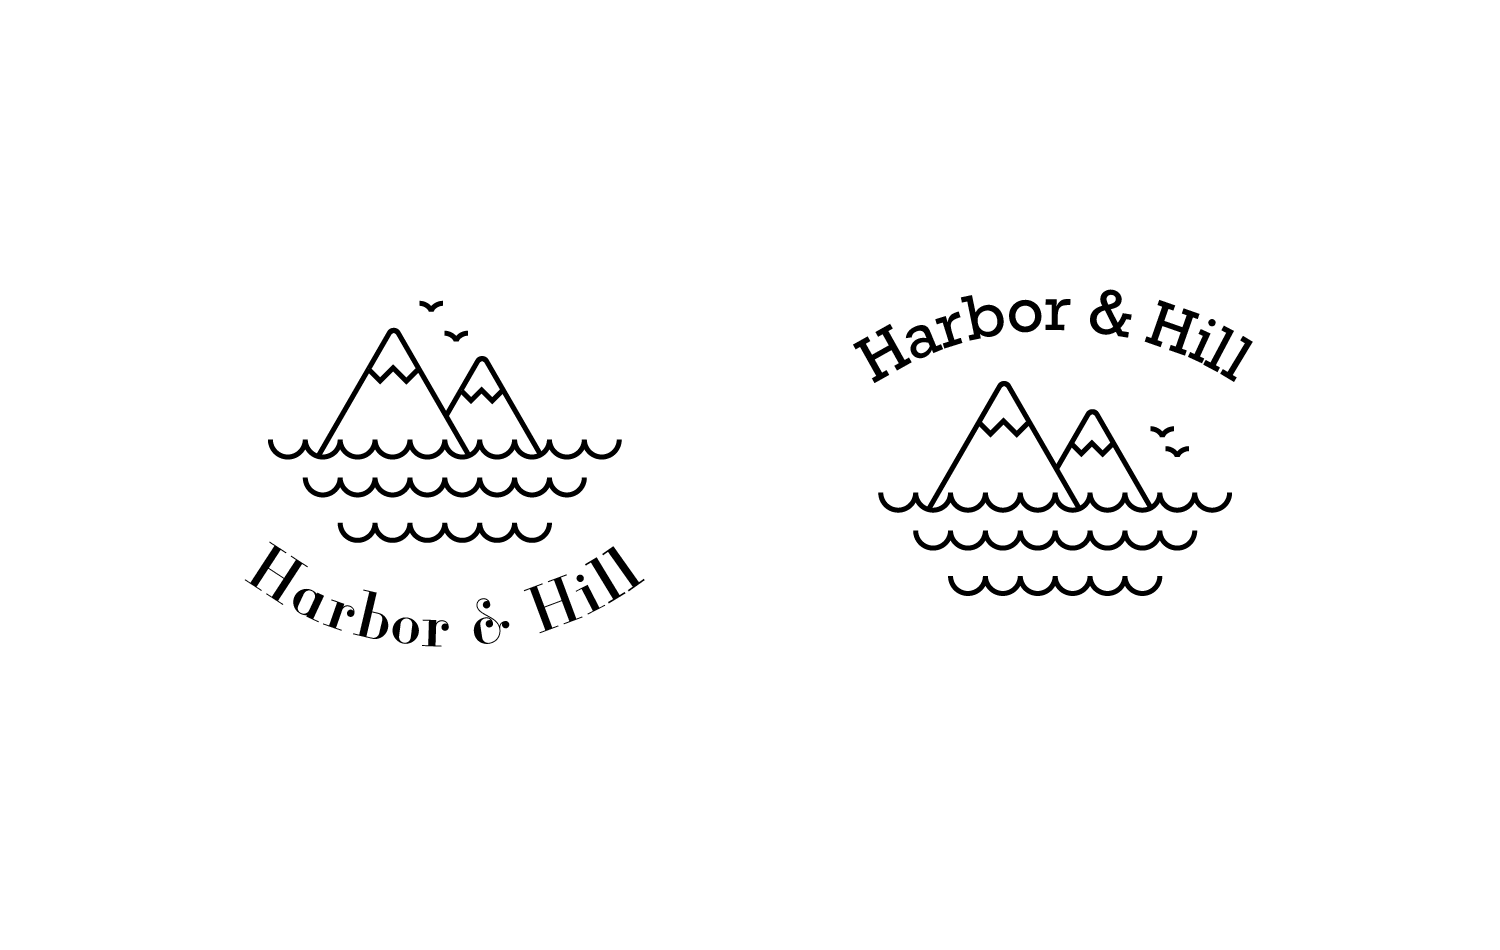 Harbor & Hill designs